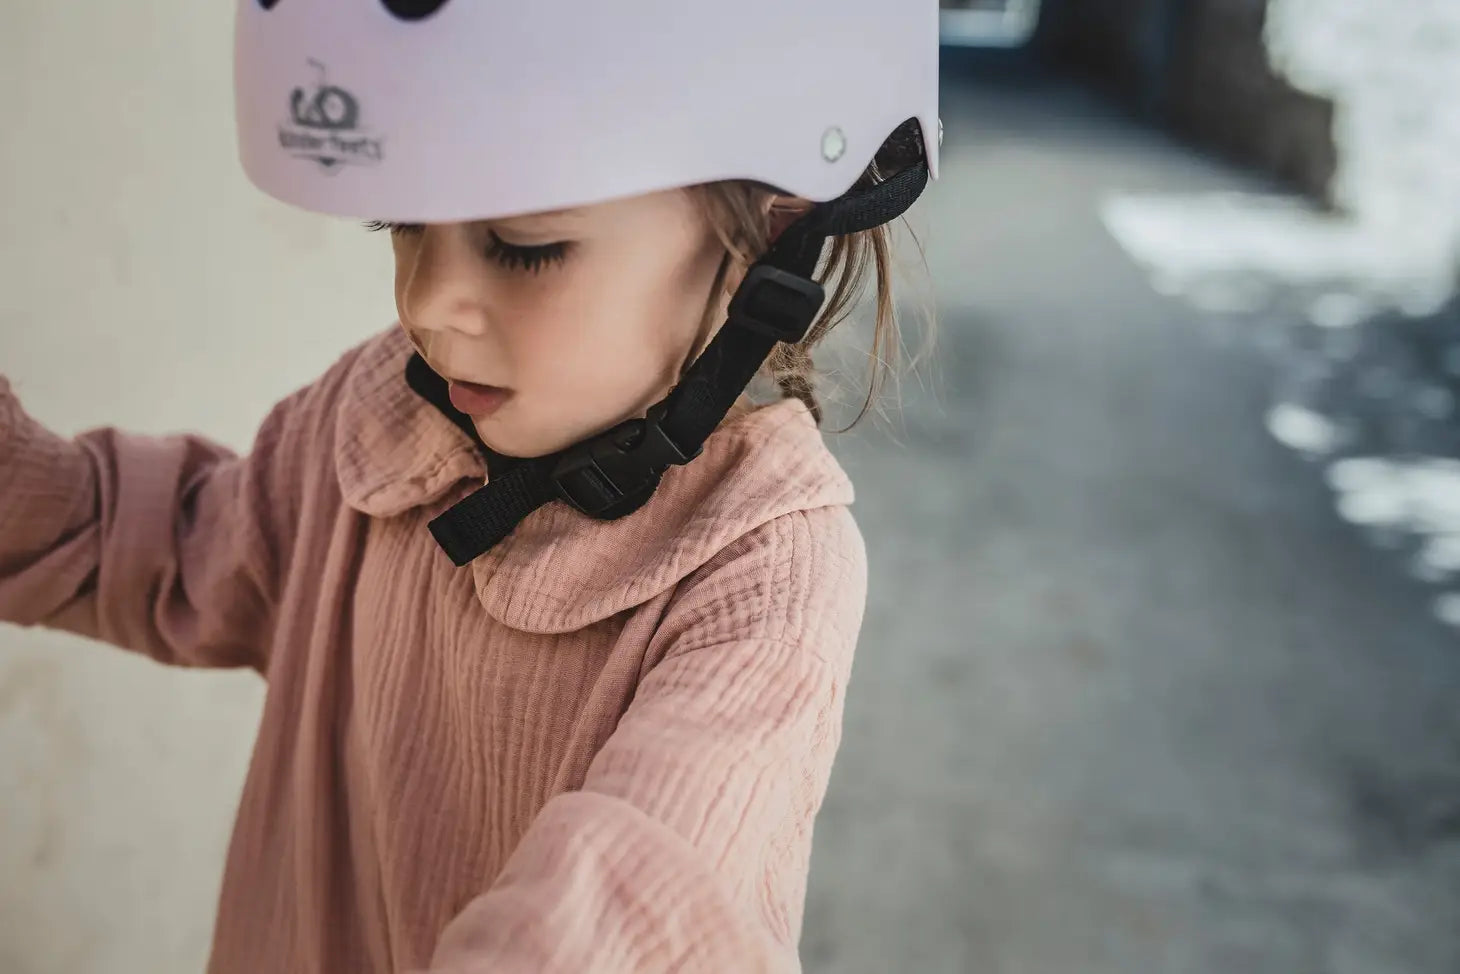 Toddler Bike Helmet by Kinderfeets